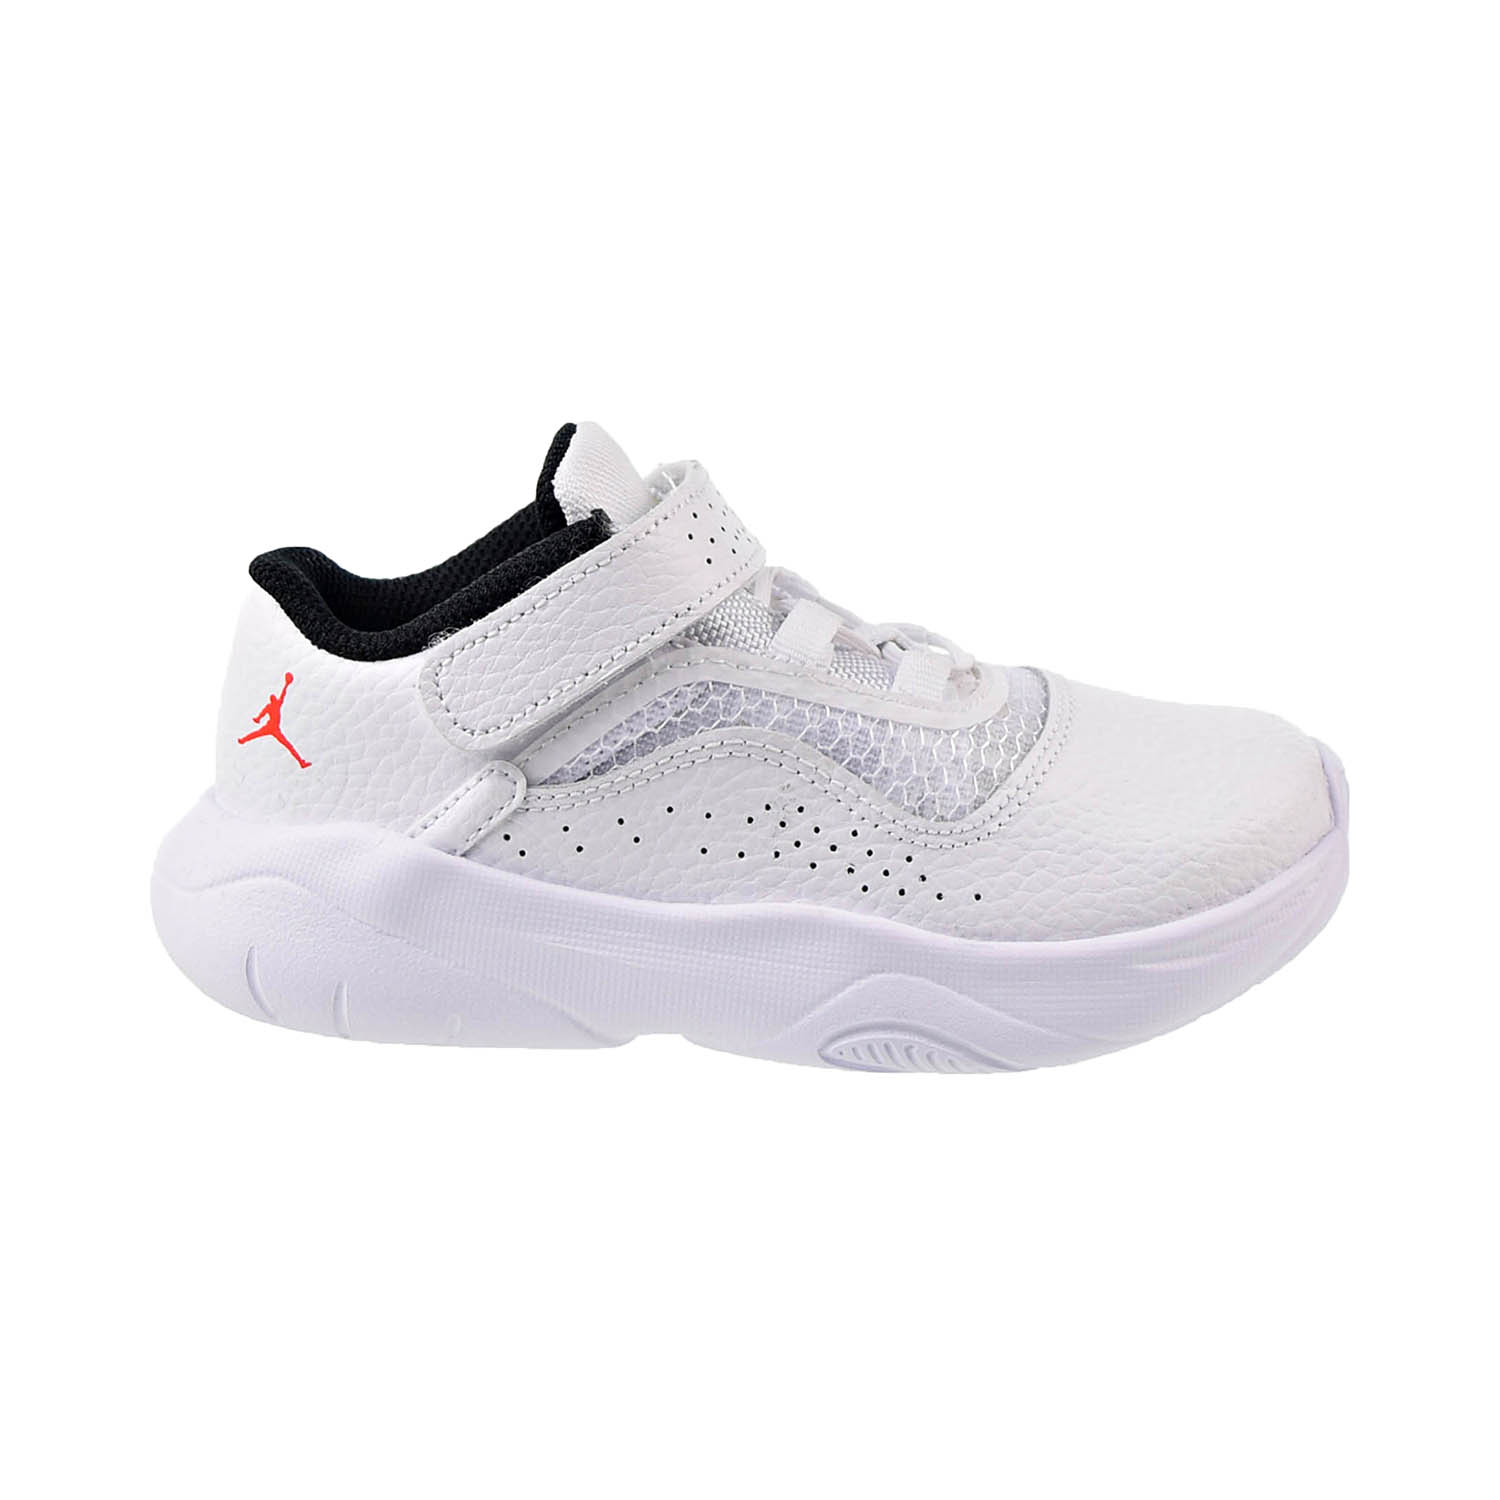 Michael Jordan Jordan 11 CMFT Low (TD) Toddlers Shoes White-Chile Red-Black cz0906-106